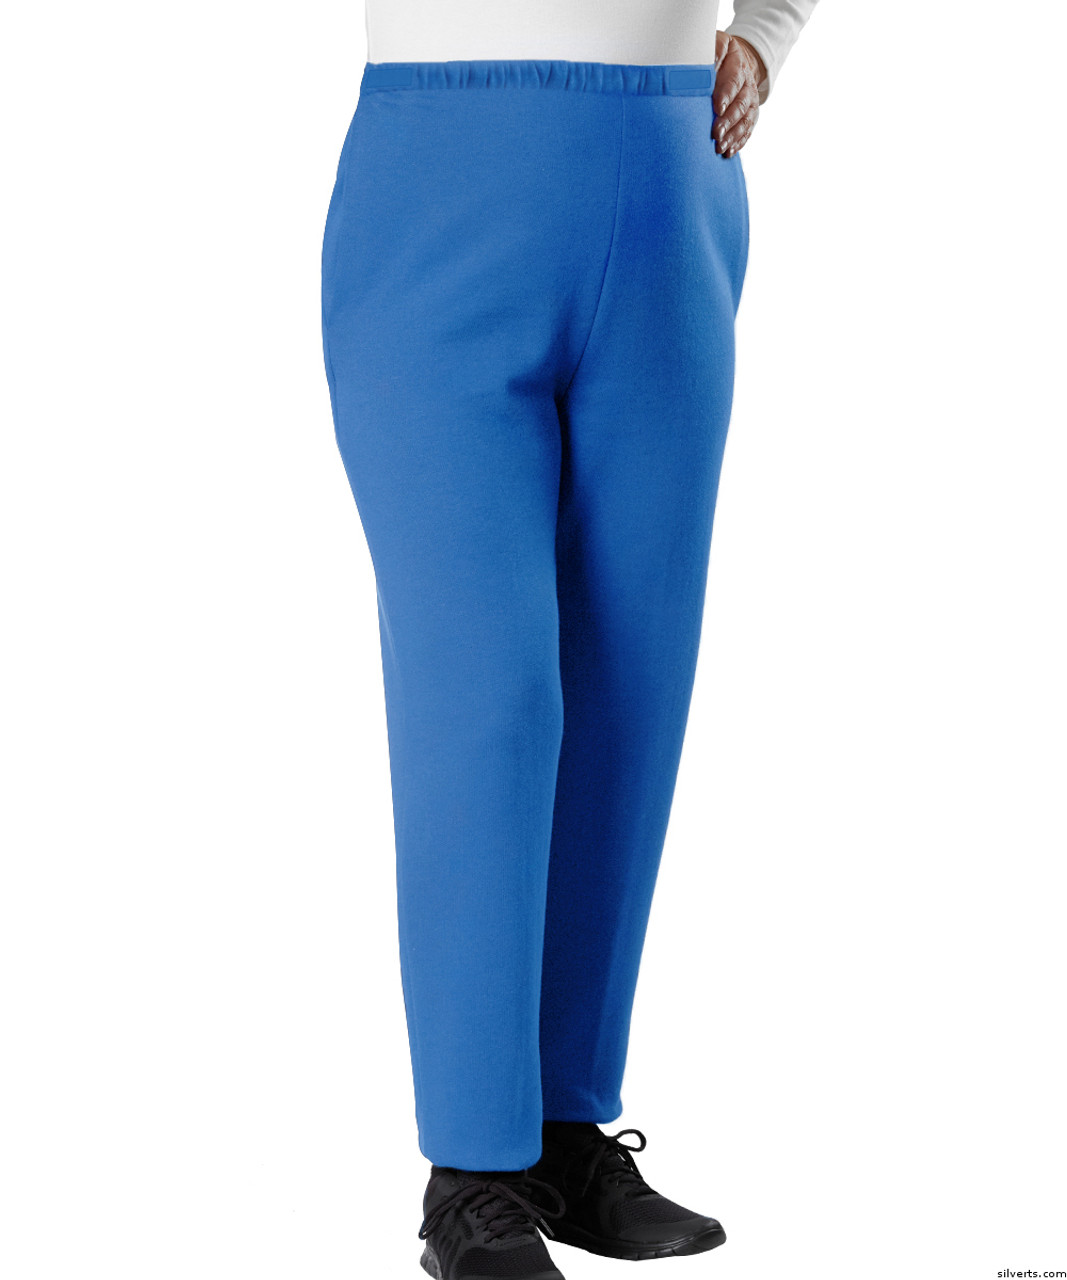 Silvert's 141230303 Conventional Fleece Track Pants For Women , Size Medium, ROYAL